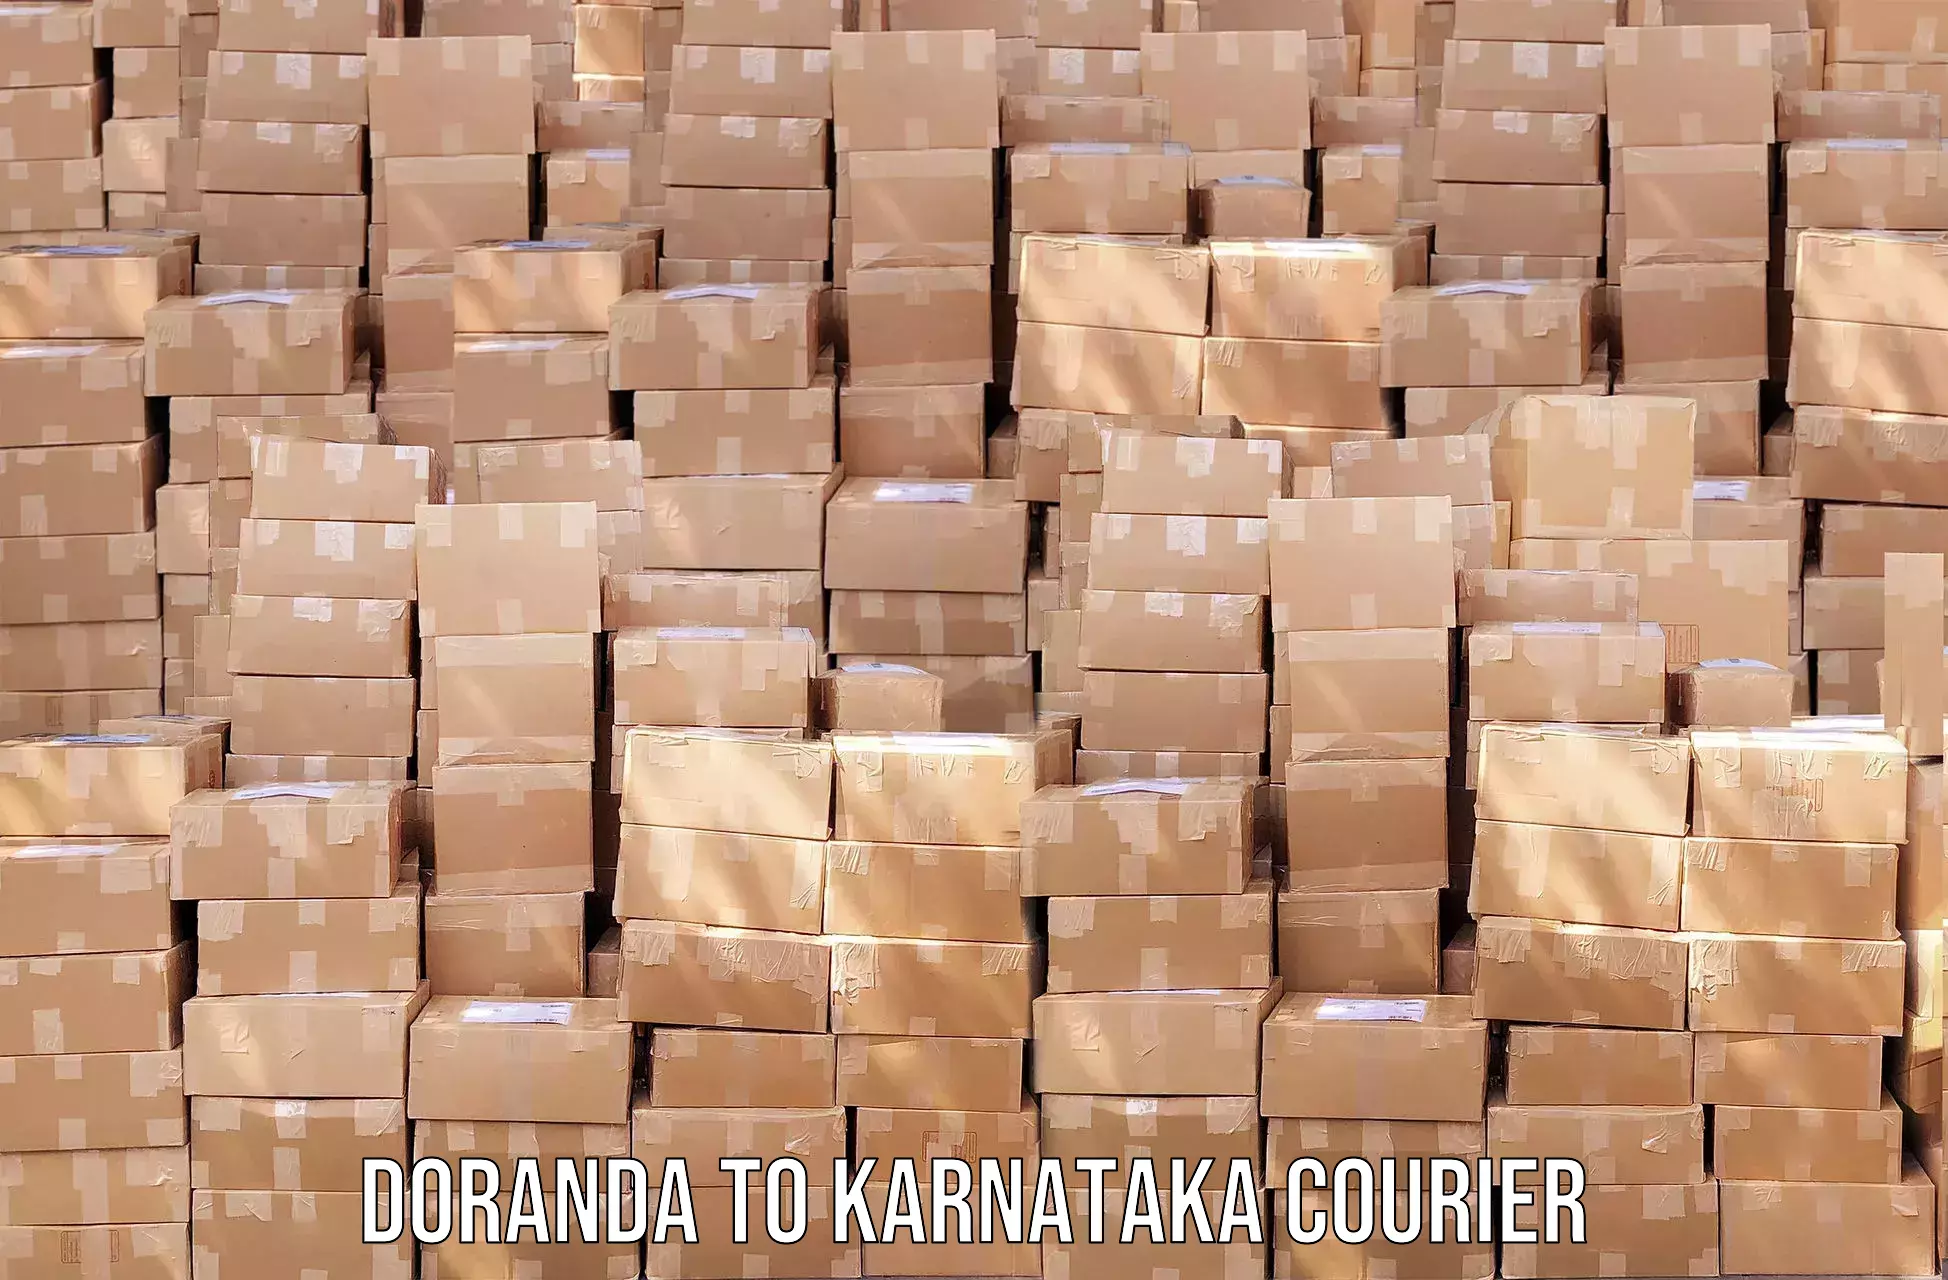 Courier service comparison Doranda to Kolar